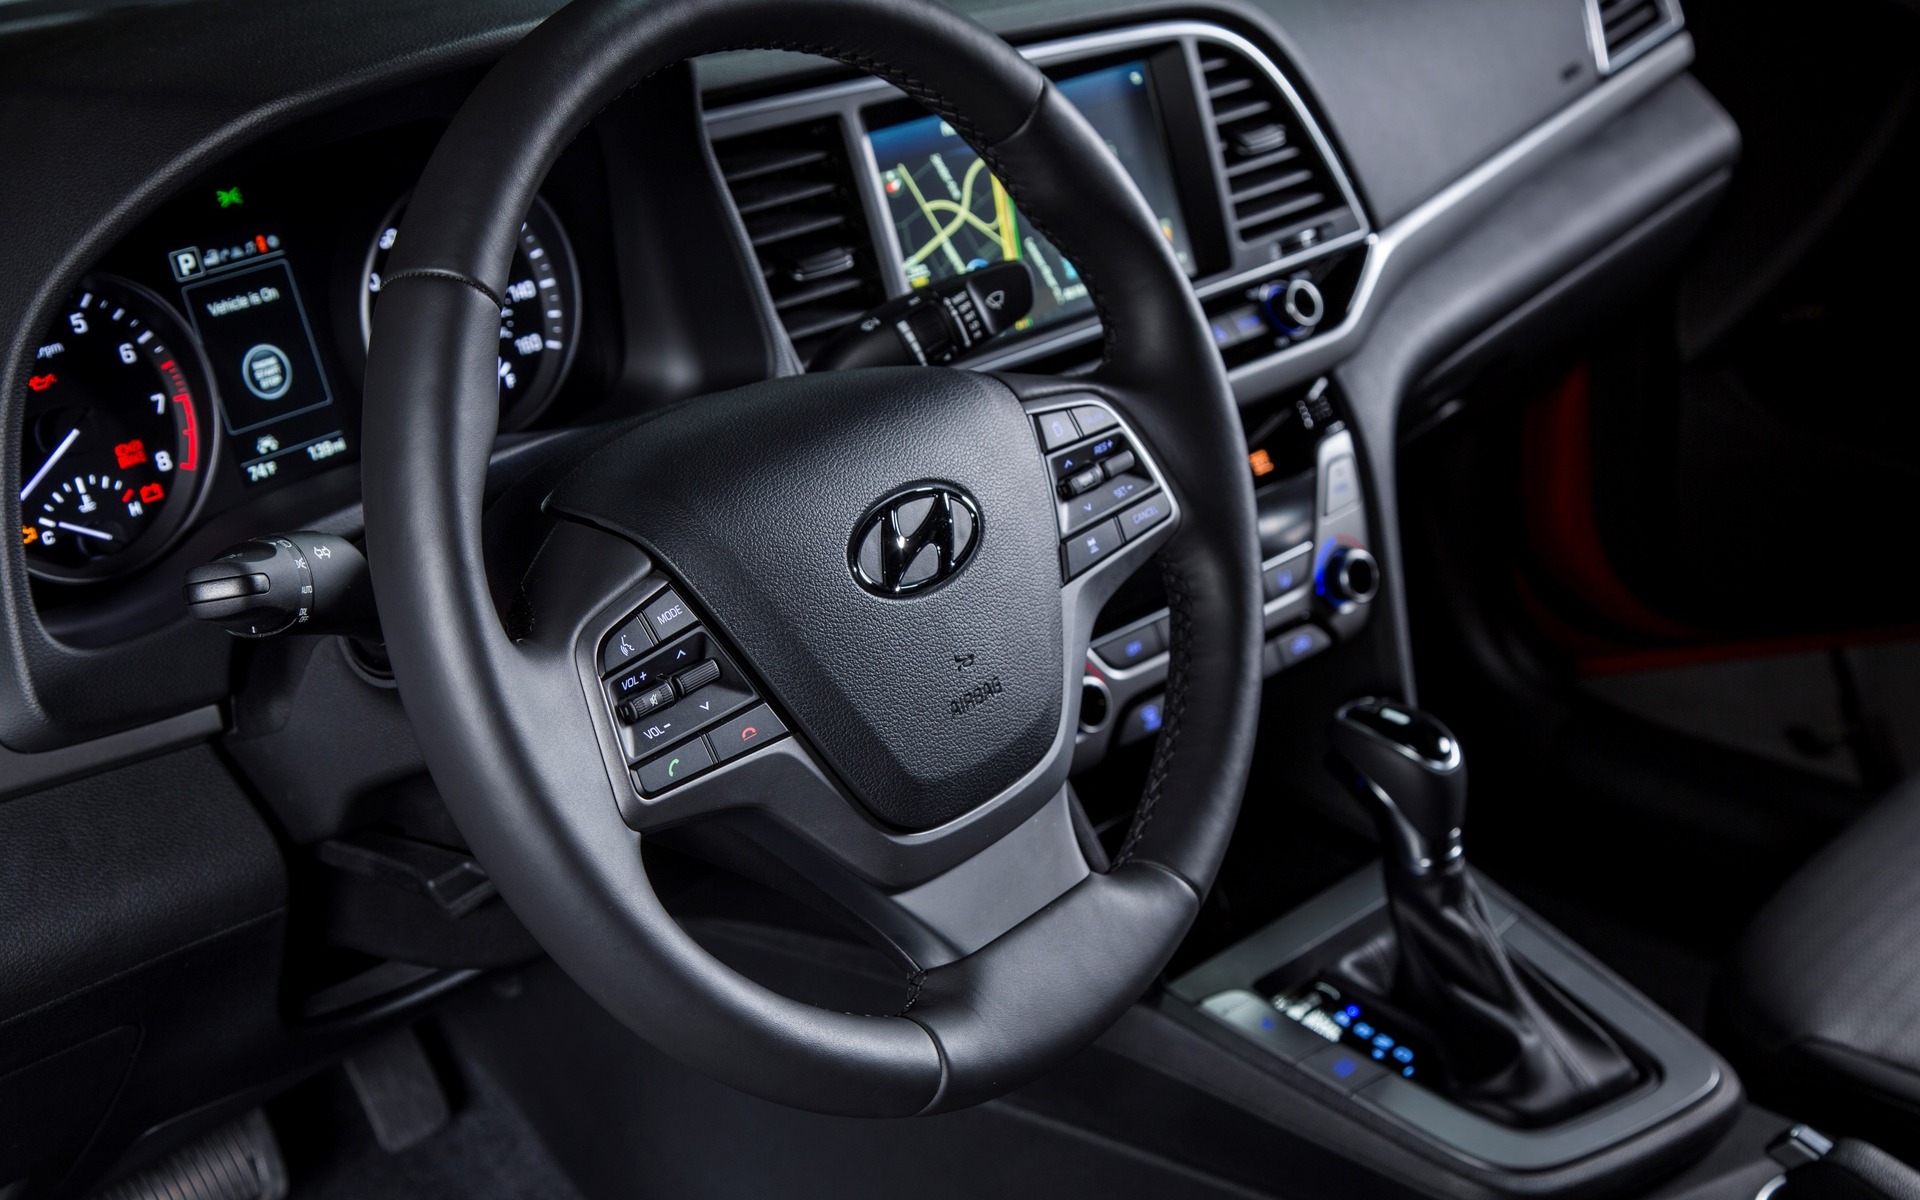 The all-new 2017 Hyundai Elantra